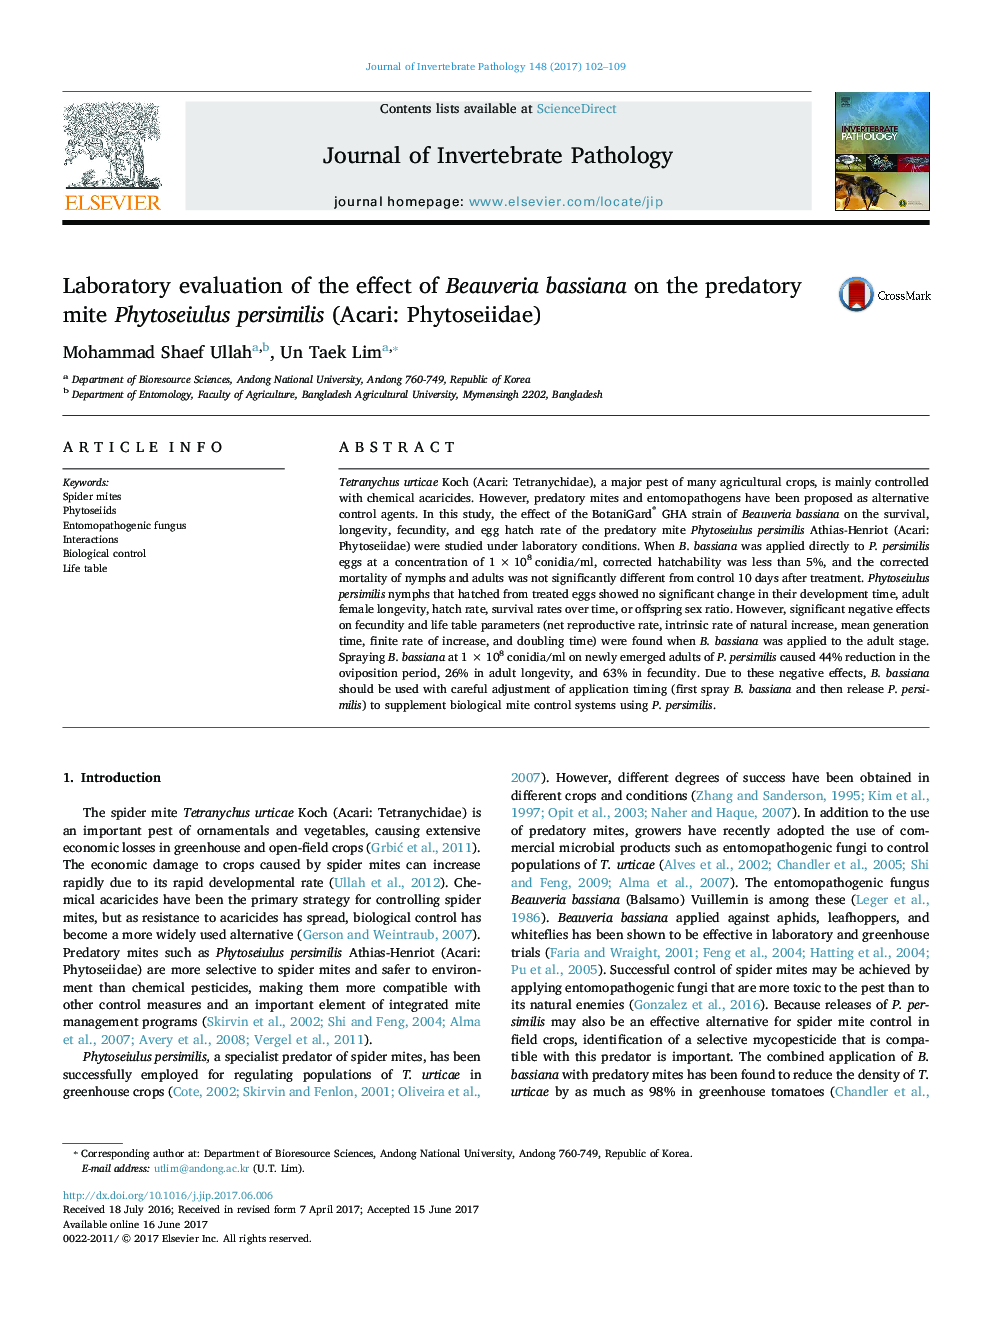 Laboratory evaluation of the effect of Beauveria bassiana on the predatory mite Phytoseiulus persimilis (Acari: Phytoseiidae)